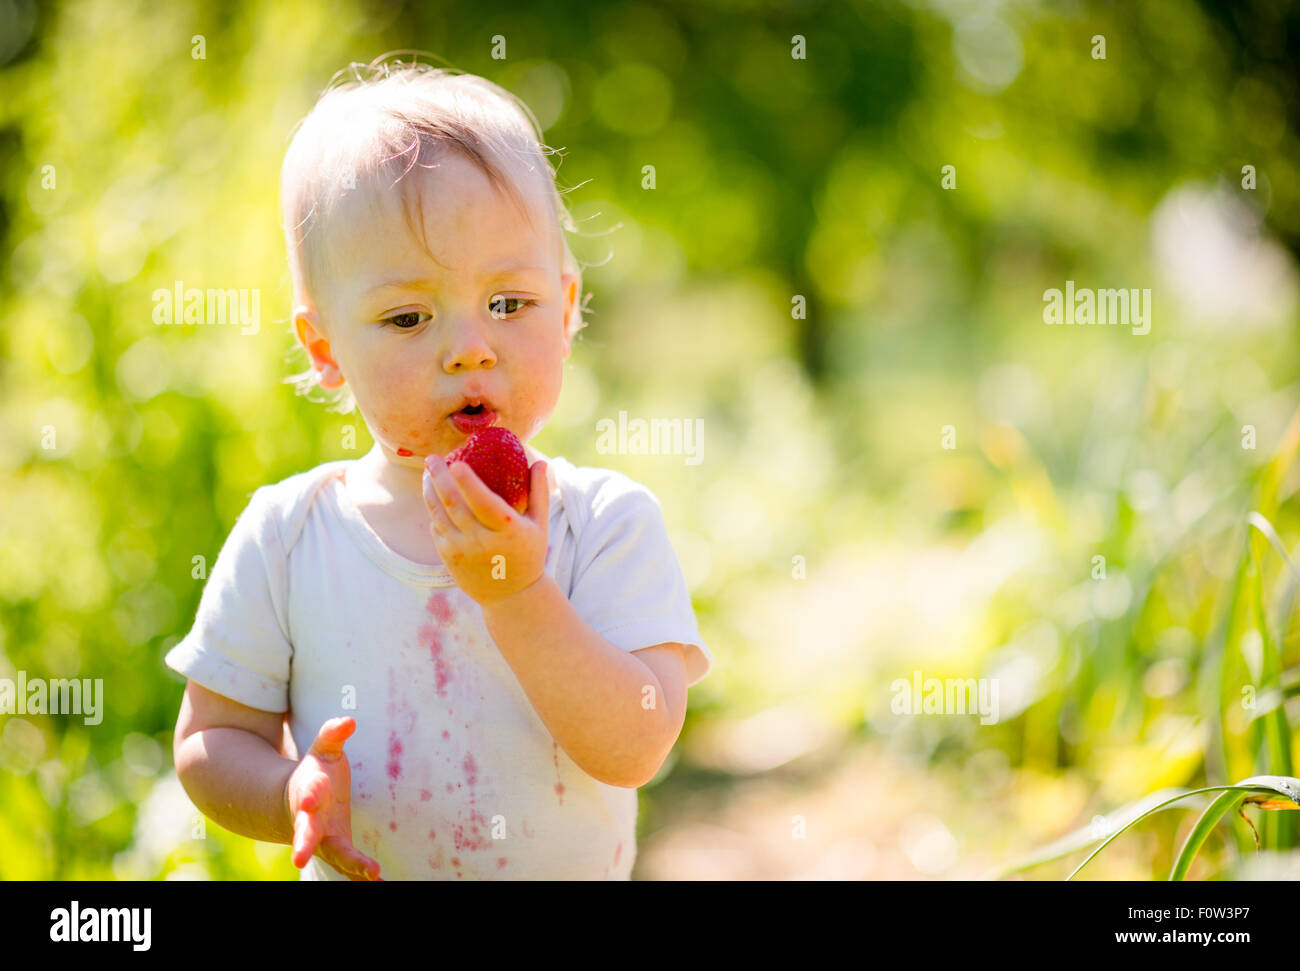 Cute little child eating strawberries, outside in backyard garden Stock Photo